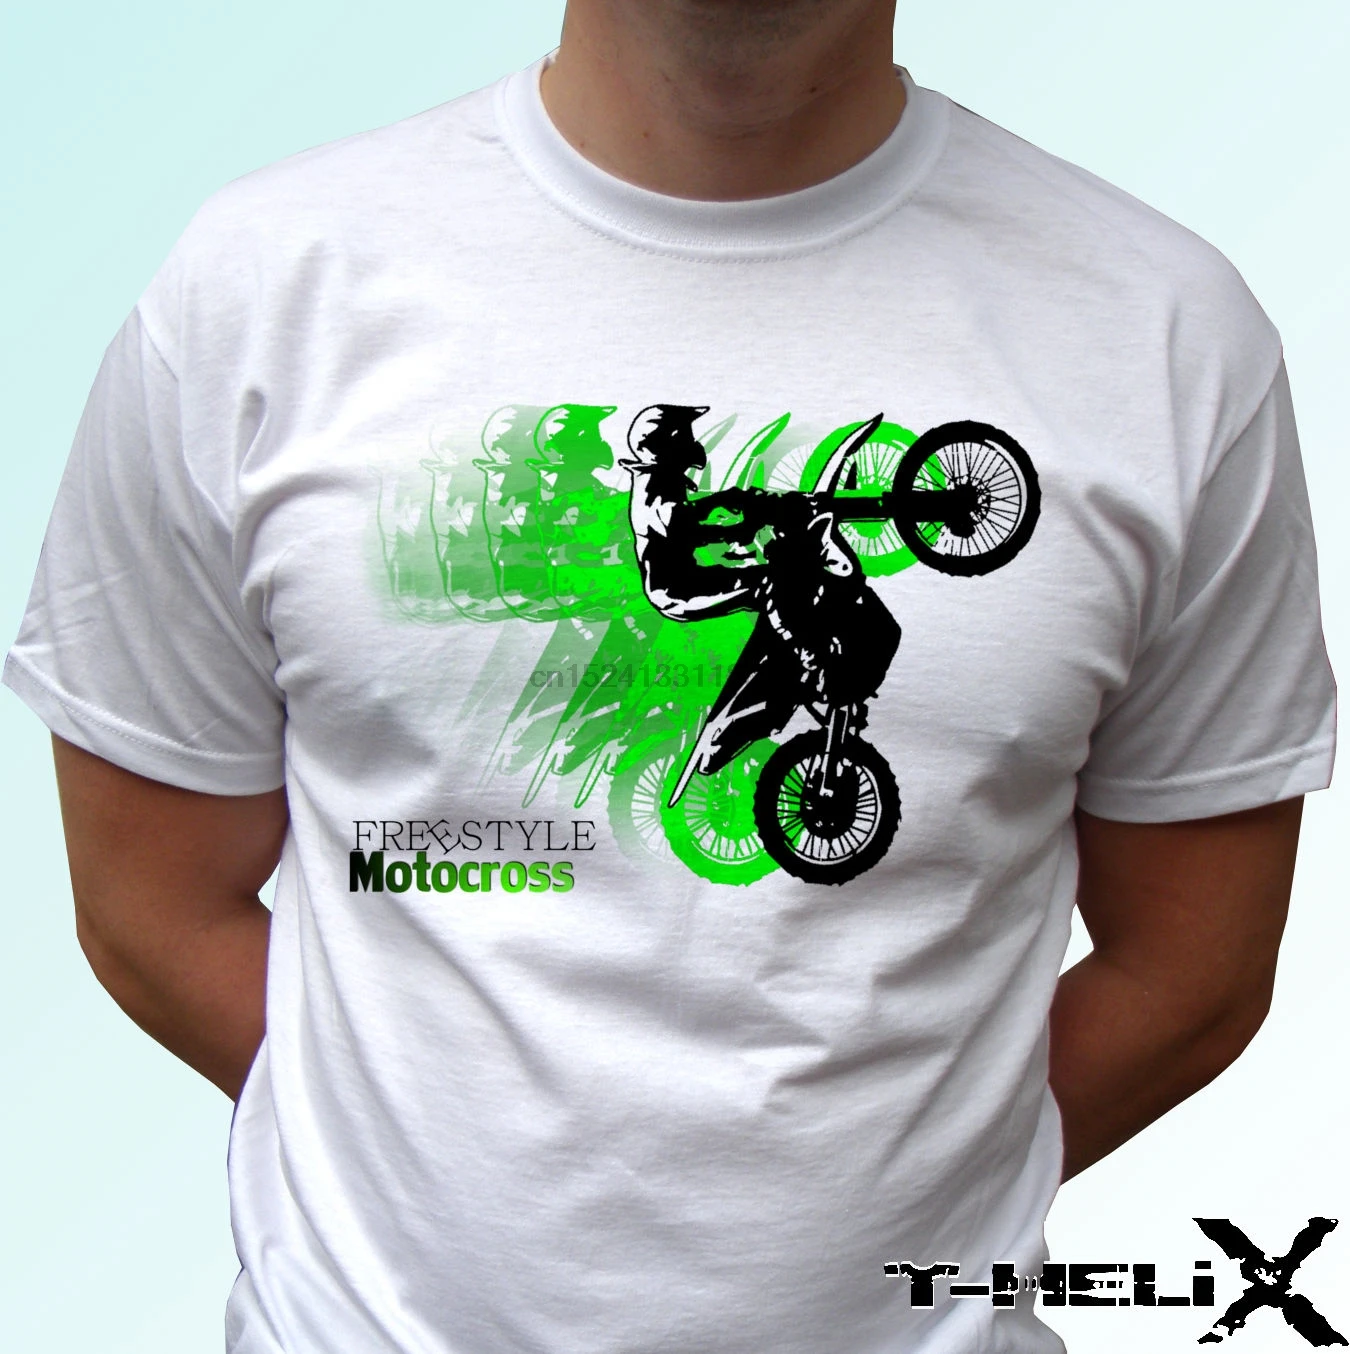 for mens womens kids baby Freestyle Motocross white t shirt top sport design